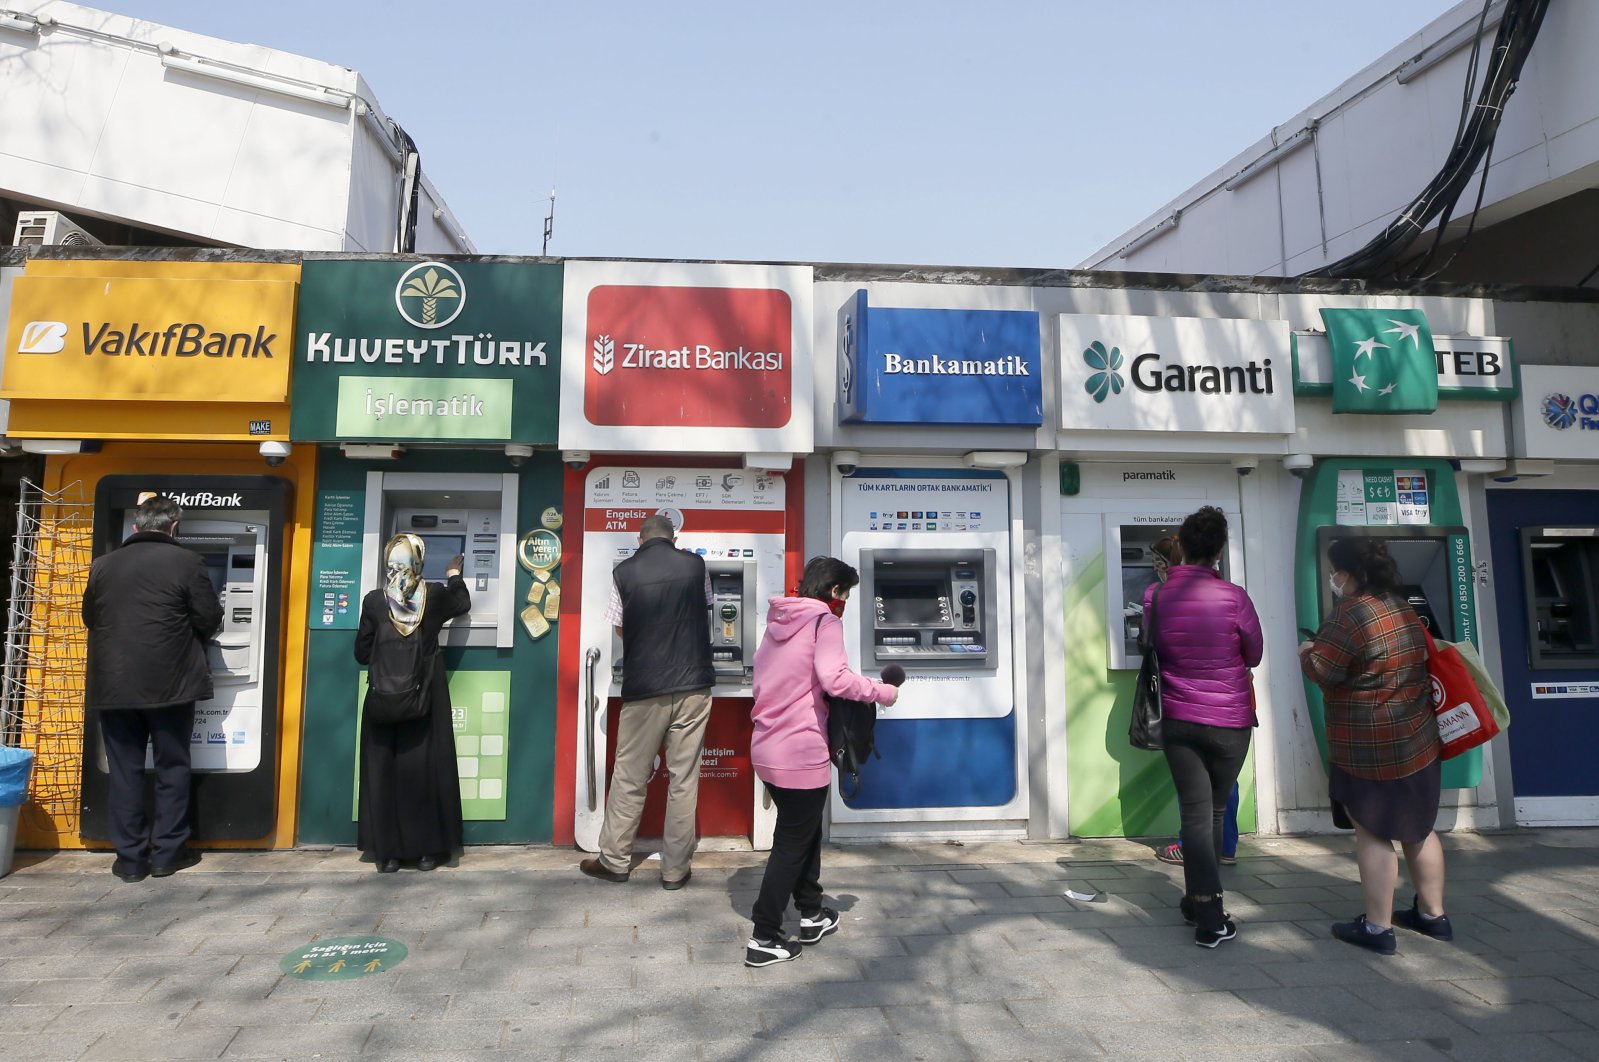 Customers use ATM machines in Istanbul's Üsküdar district, April 27, 2020